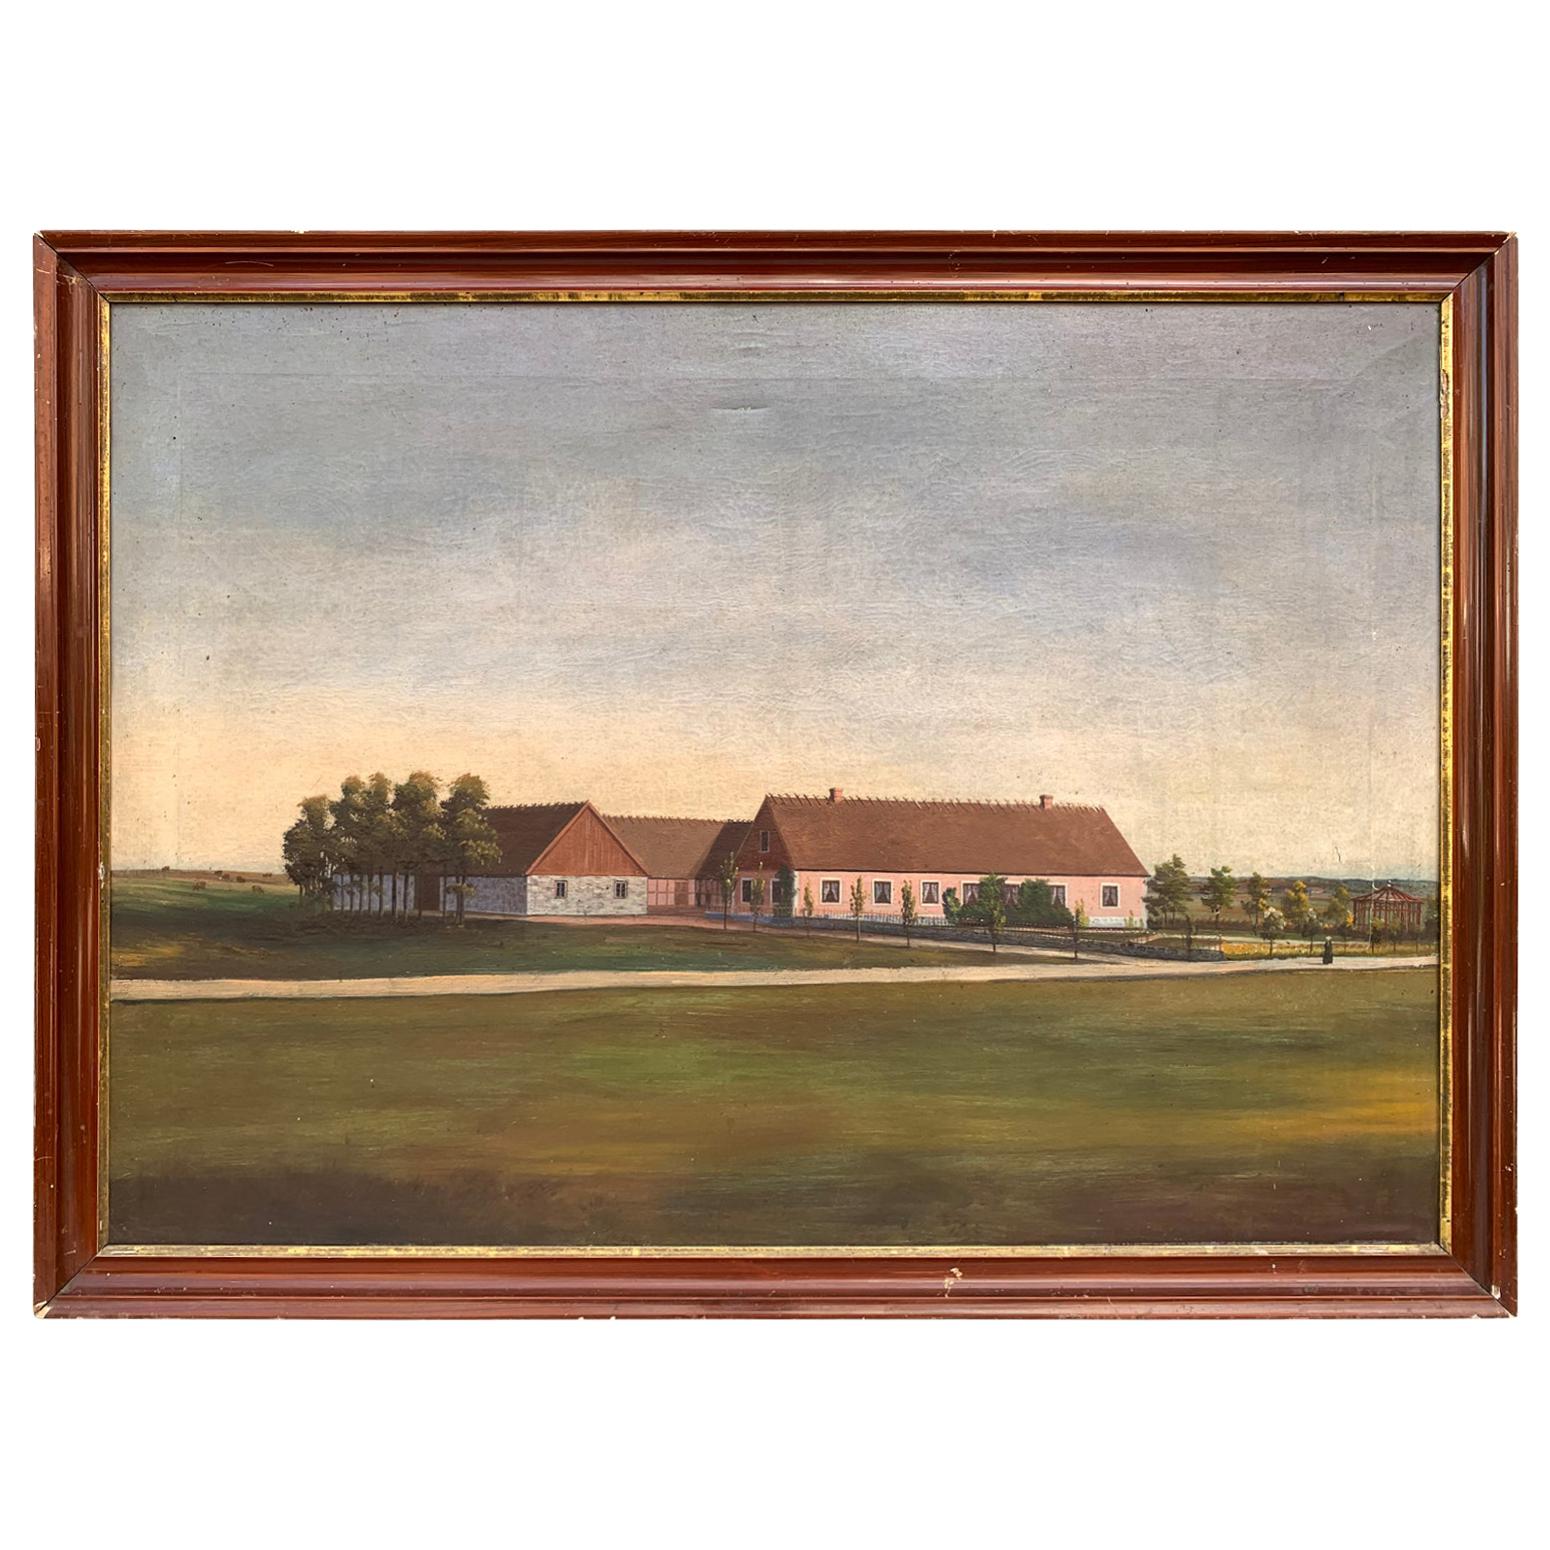 Folk Art Mid-19th Century Fork Art Oil Painting of a Danish or Swedish Farm